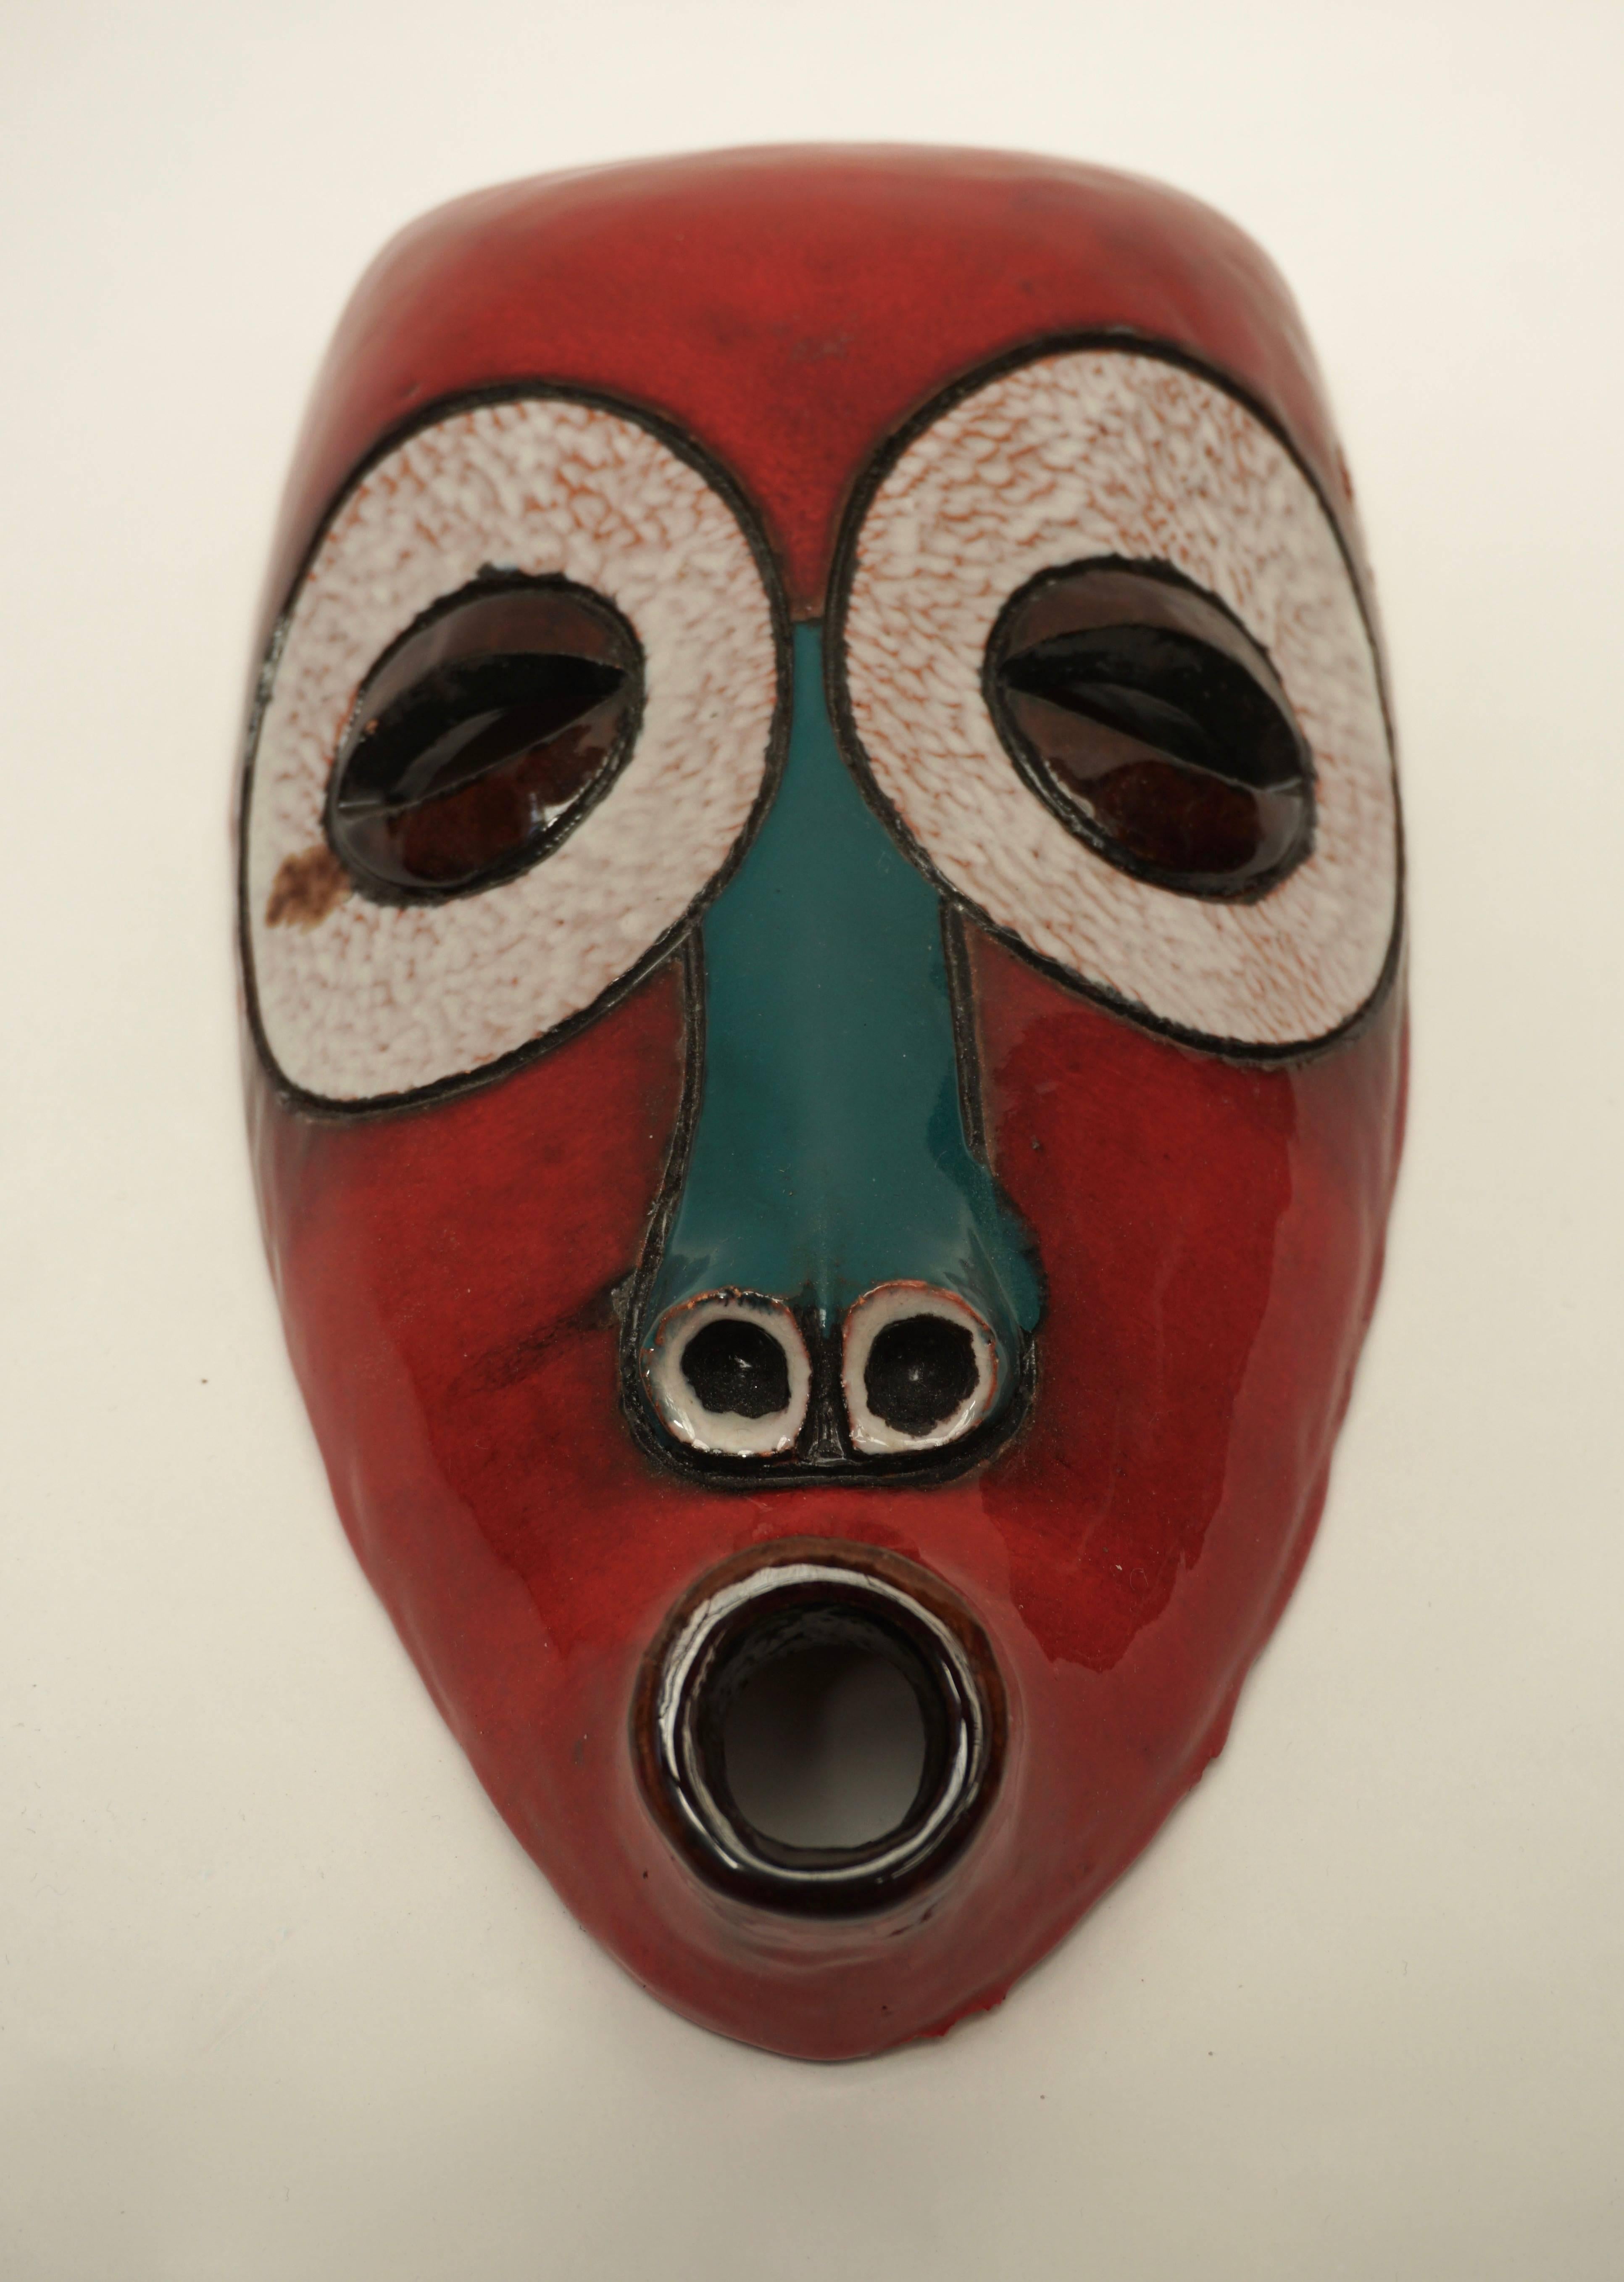 Ceramic mask, Baku Ghana.
Signed:AT Manteto,Baku 1974.
Measures: Height 32 cm.
Width 17 cm.
Depth 8 cm.